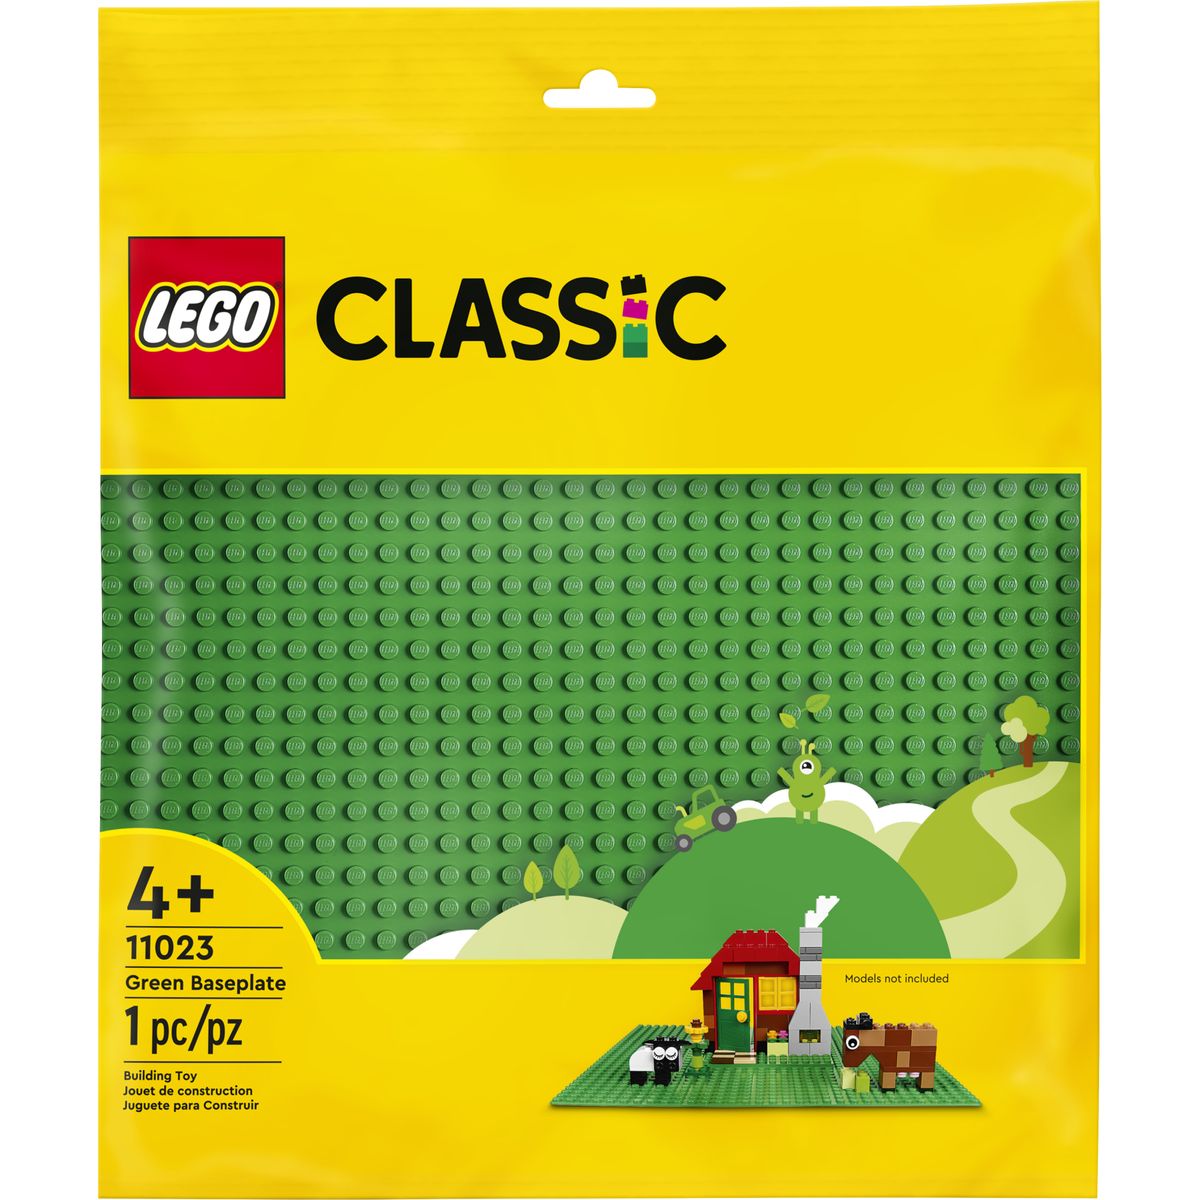 [RDY] [送料無料] LEGO クラシックグリーンベースプレート 11023 [楽天海外通販] | LEGO Classic Green Baseplate 11023